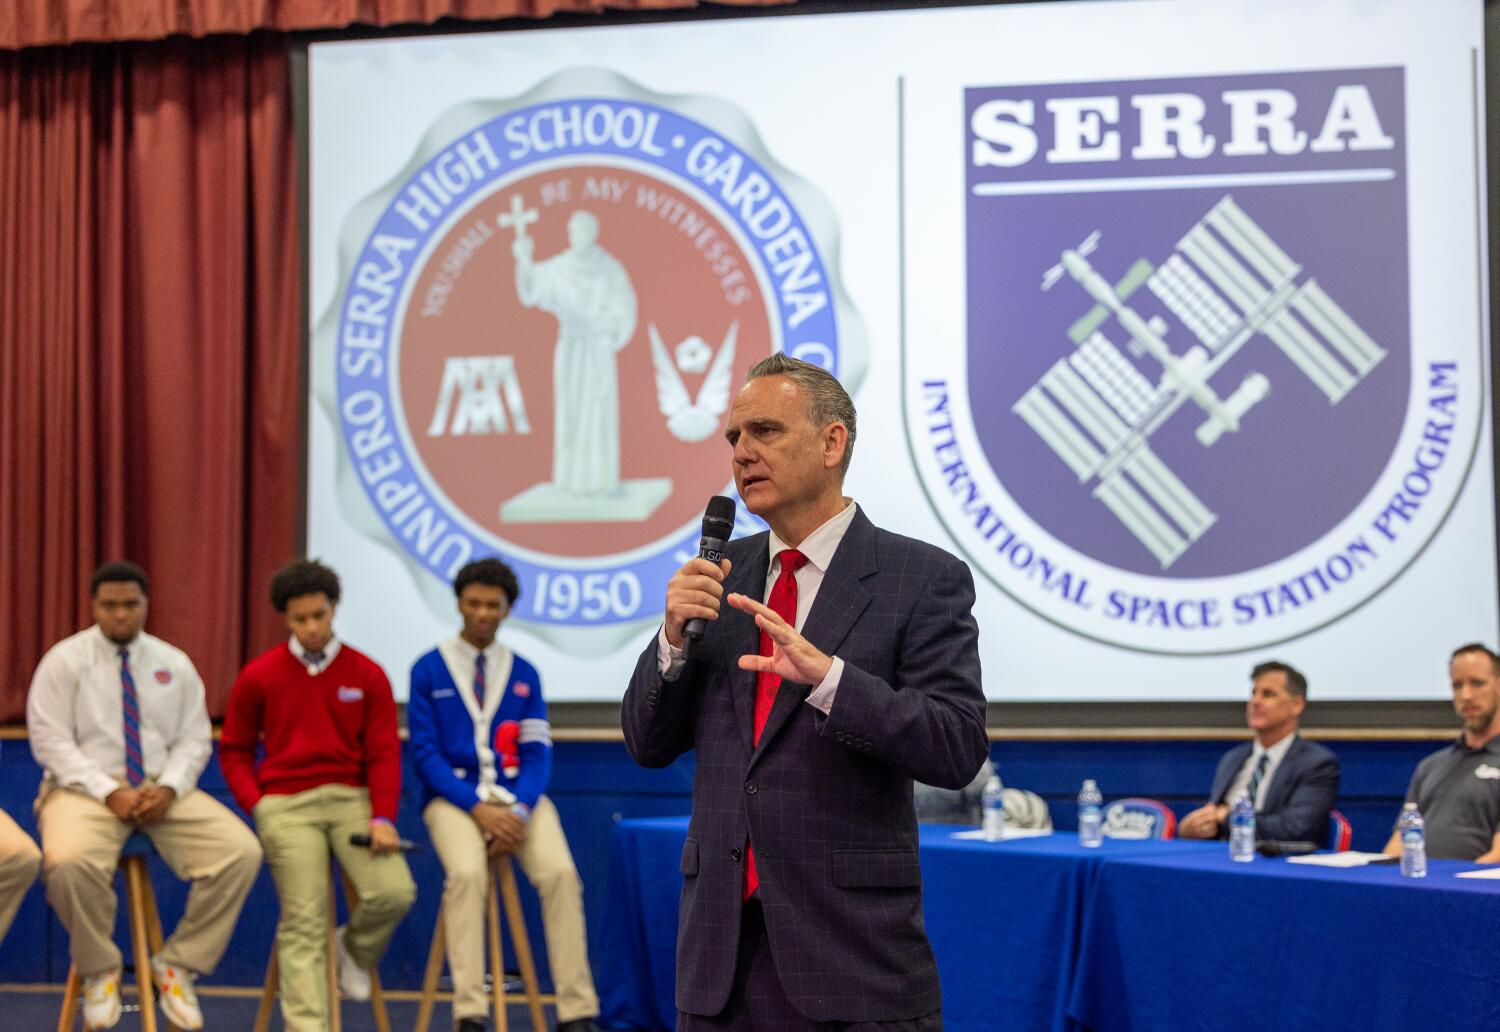 Serra High space team seeks to turn school into science destination